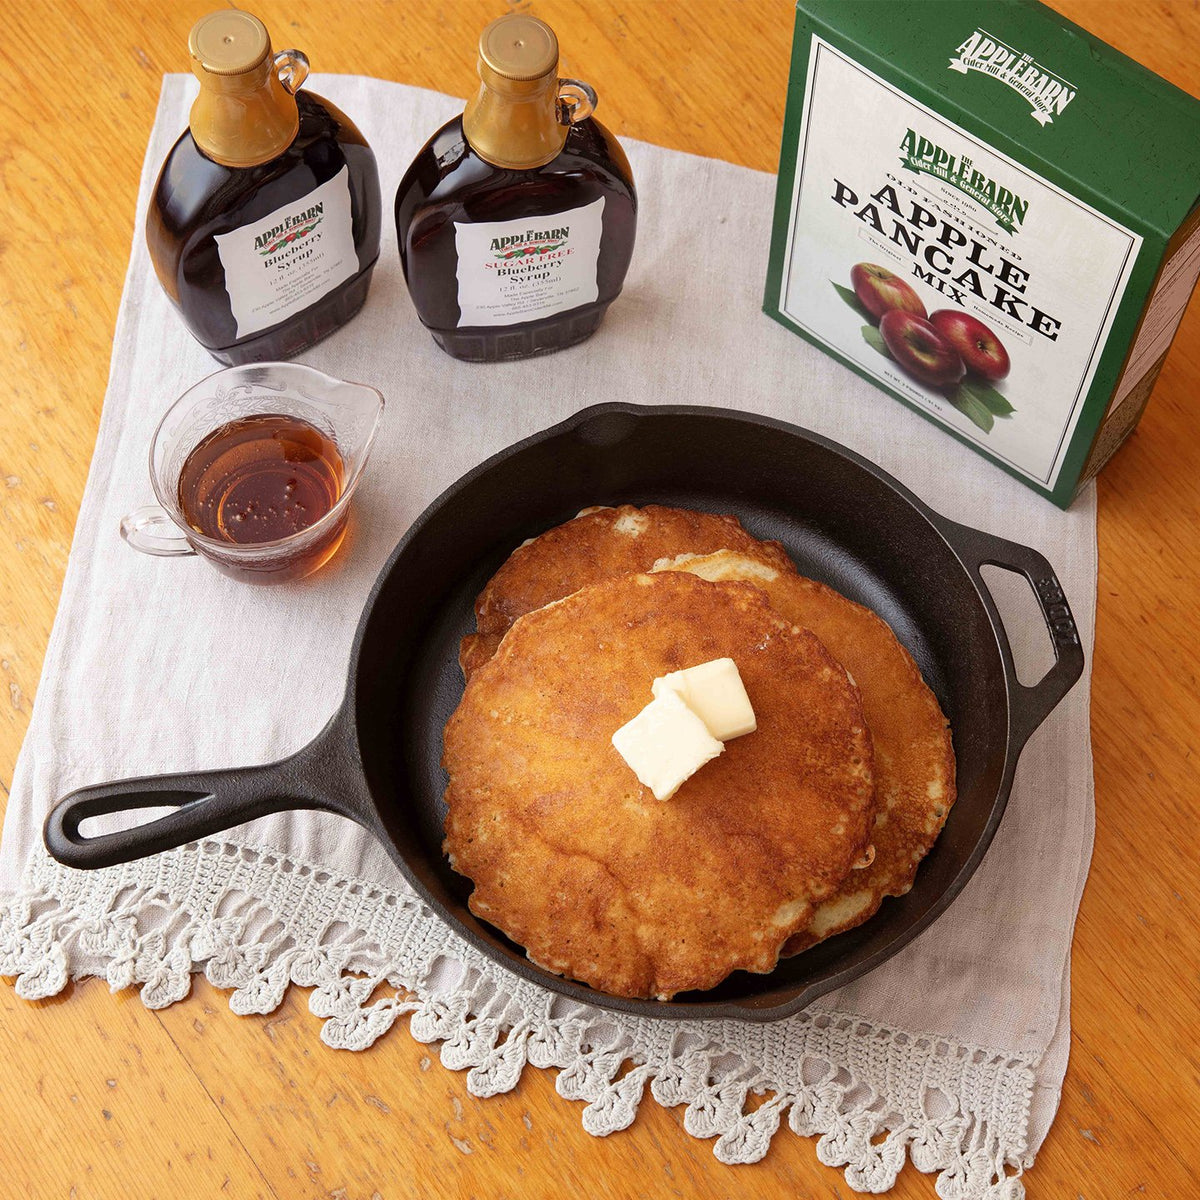 Sugar free blueberry syrup on apple pancakes